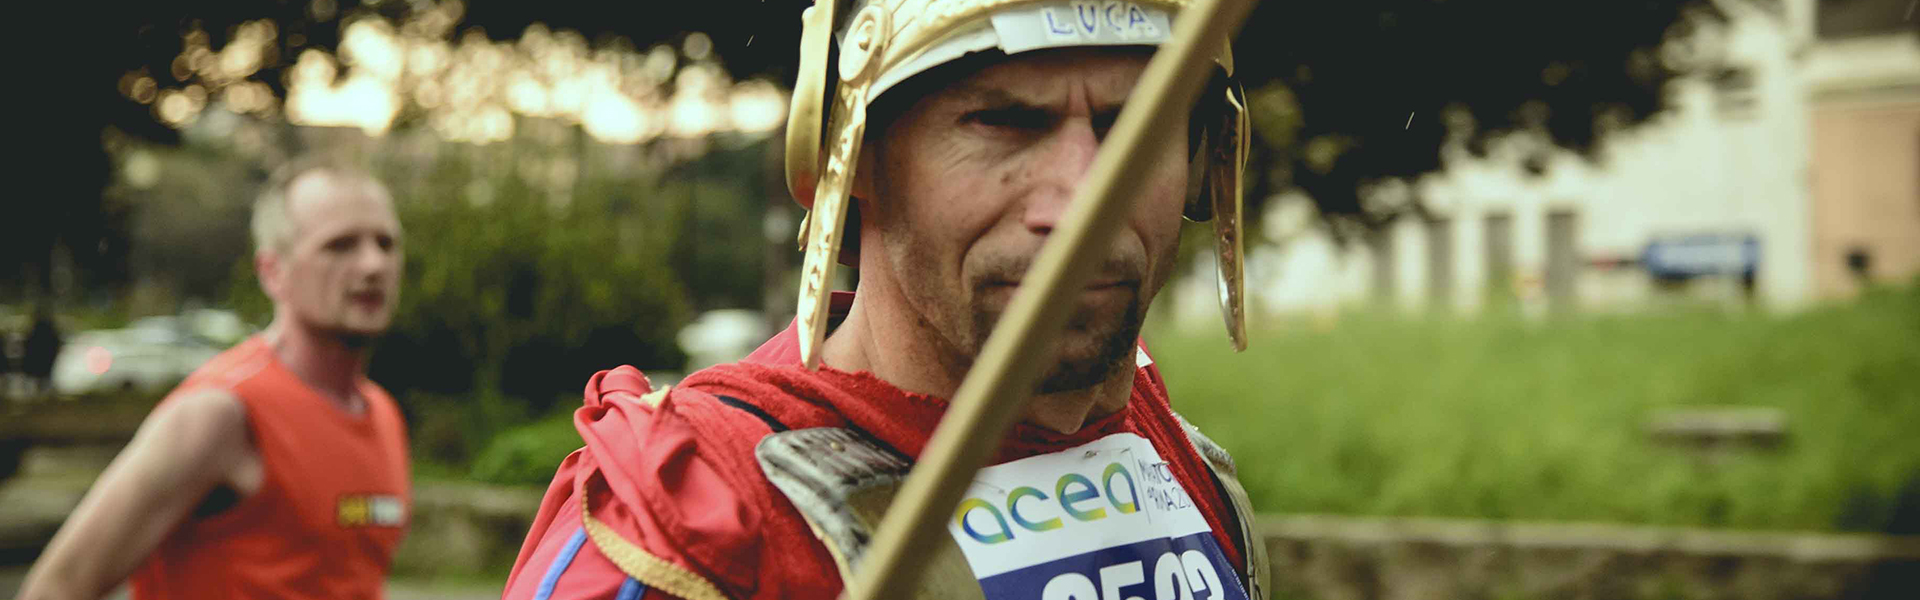 10 reasons to run Acea Run Rome the Marathon